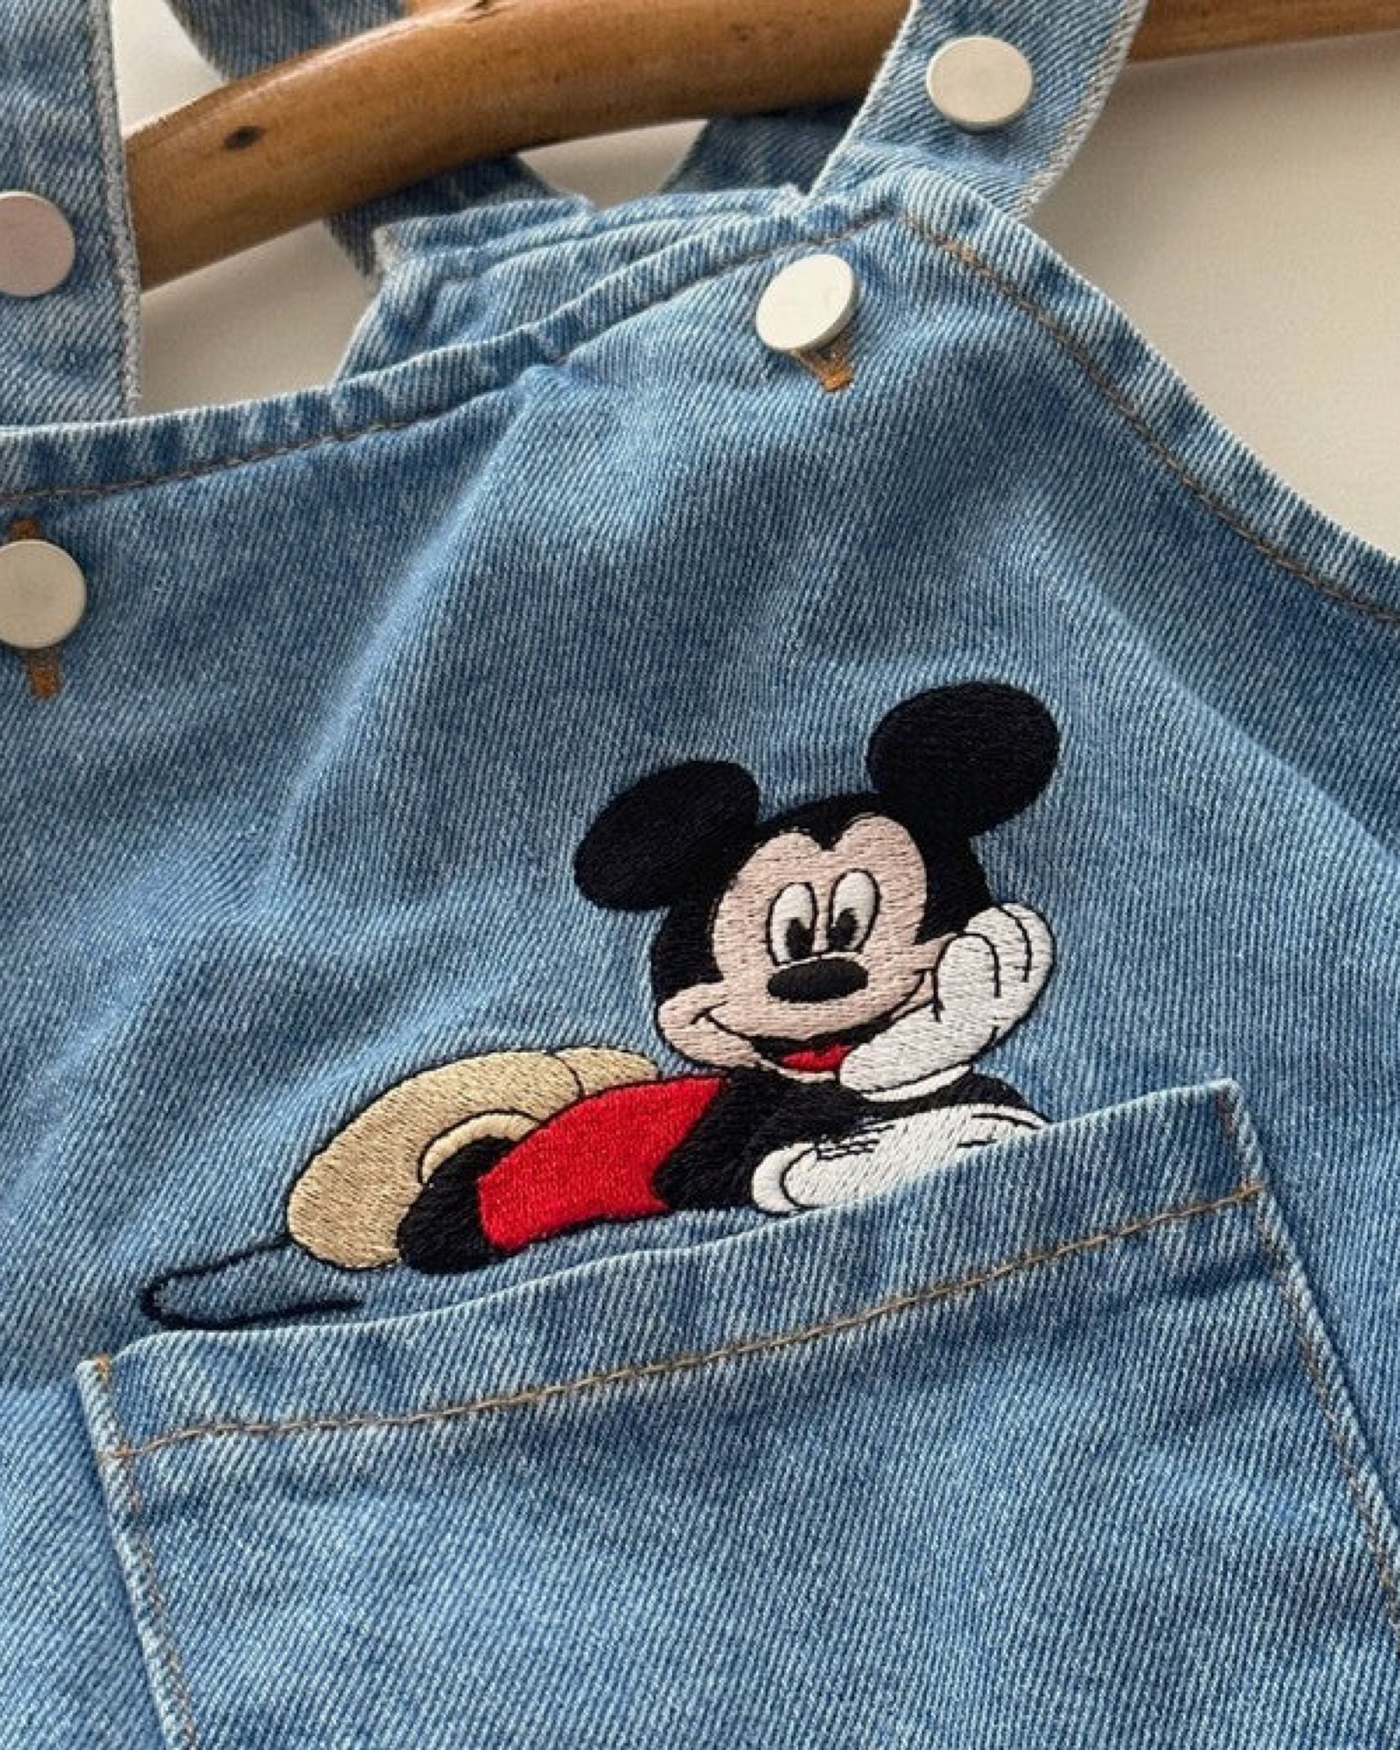 Disney Mickey Overalls